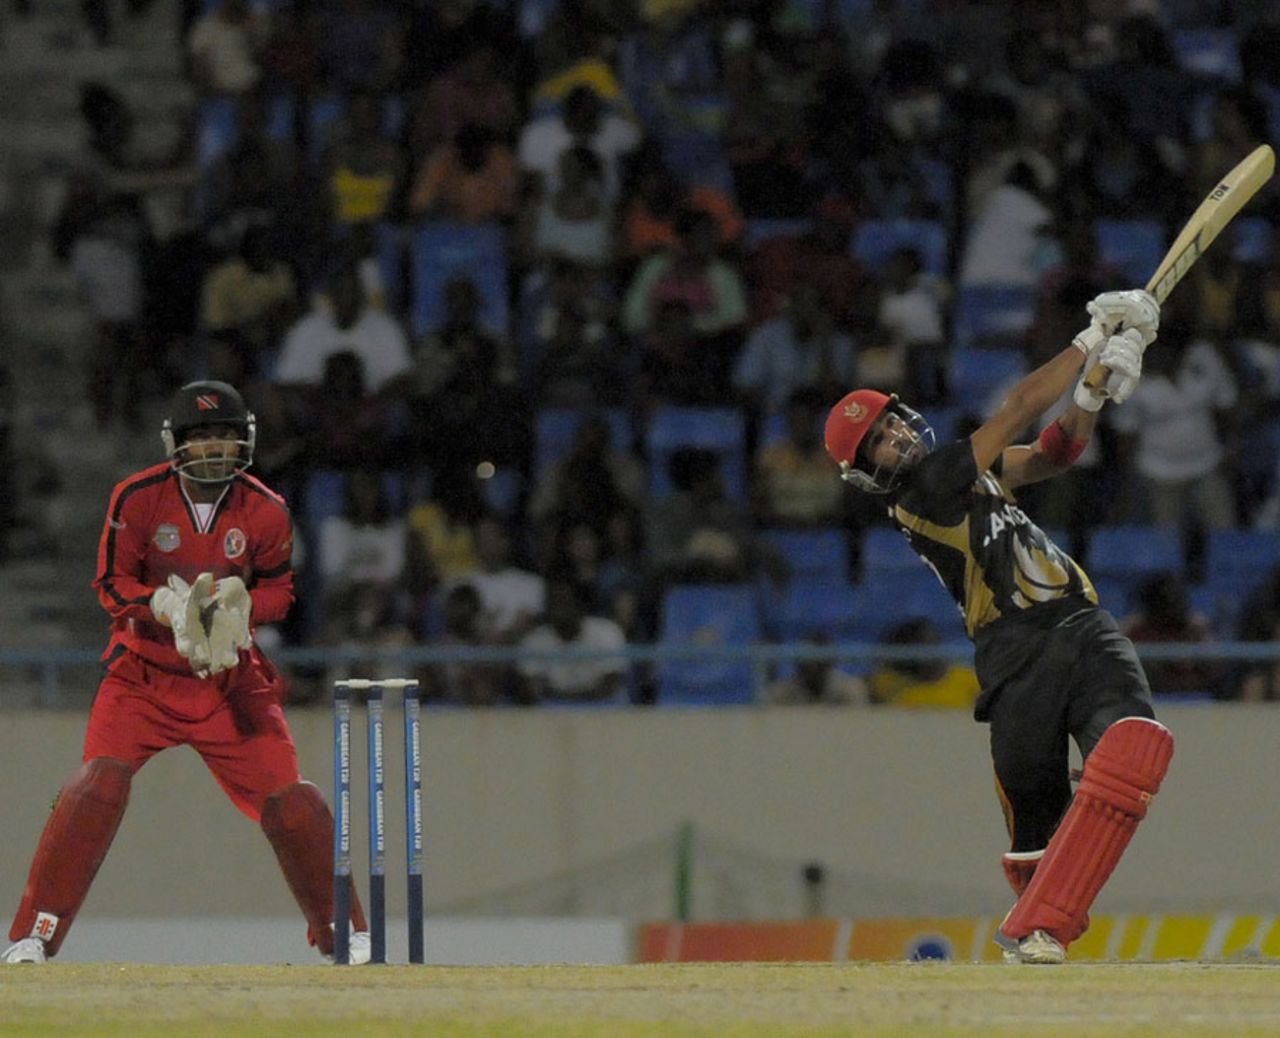 Zubin Surkari goes for a big shot during his 42, Canada v Trinidad & Tobago, Antigua, Caribbean T20, January 15, 2011 